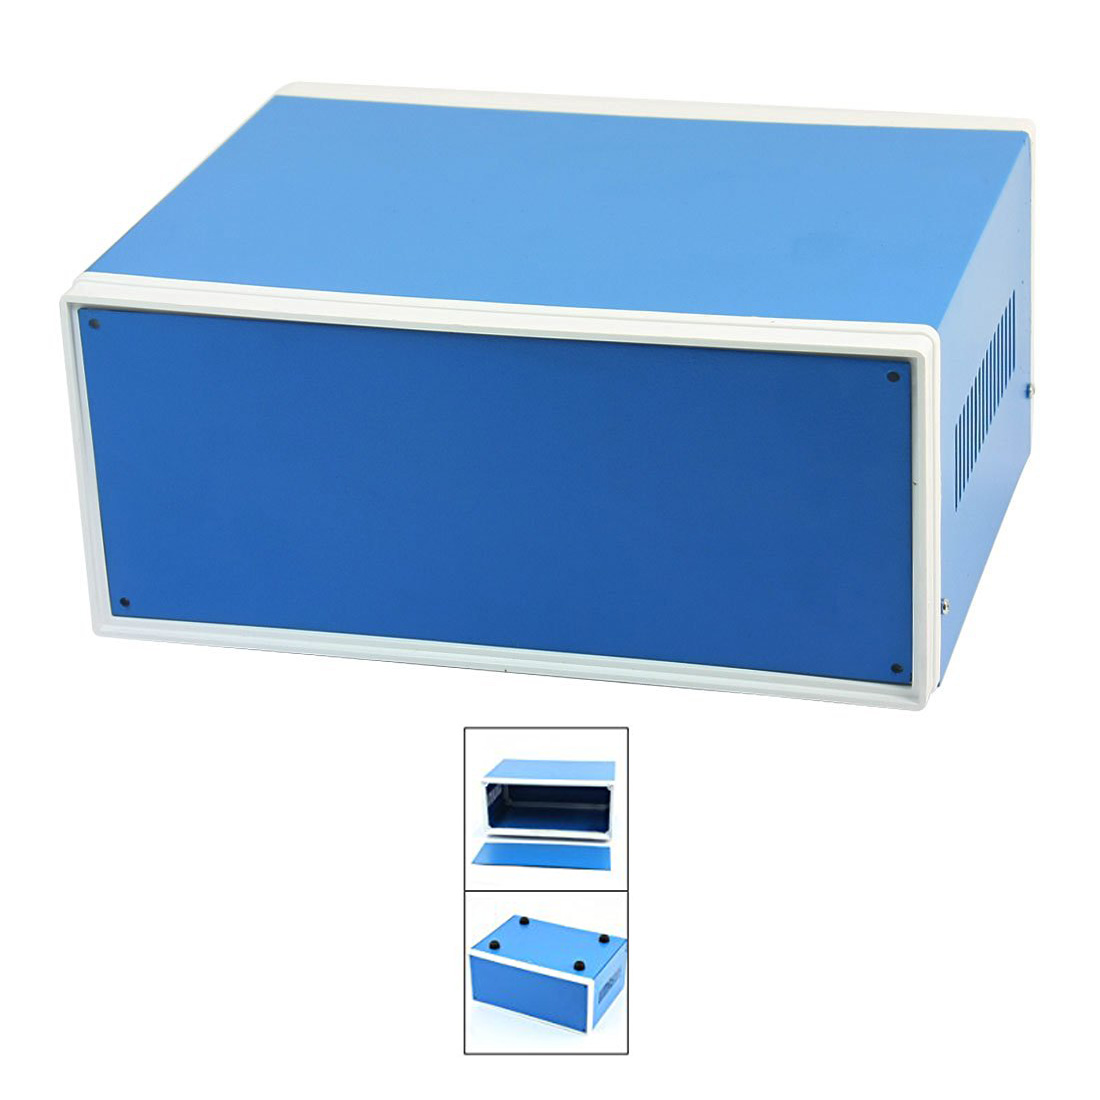 9.8" x 7.5" x 4.3" Blue Metal Enclosure Project Case DIY Junction Box ED 